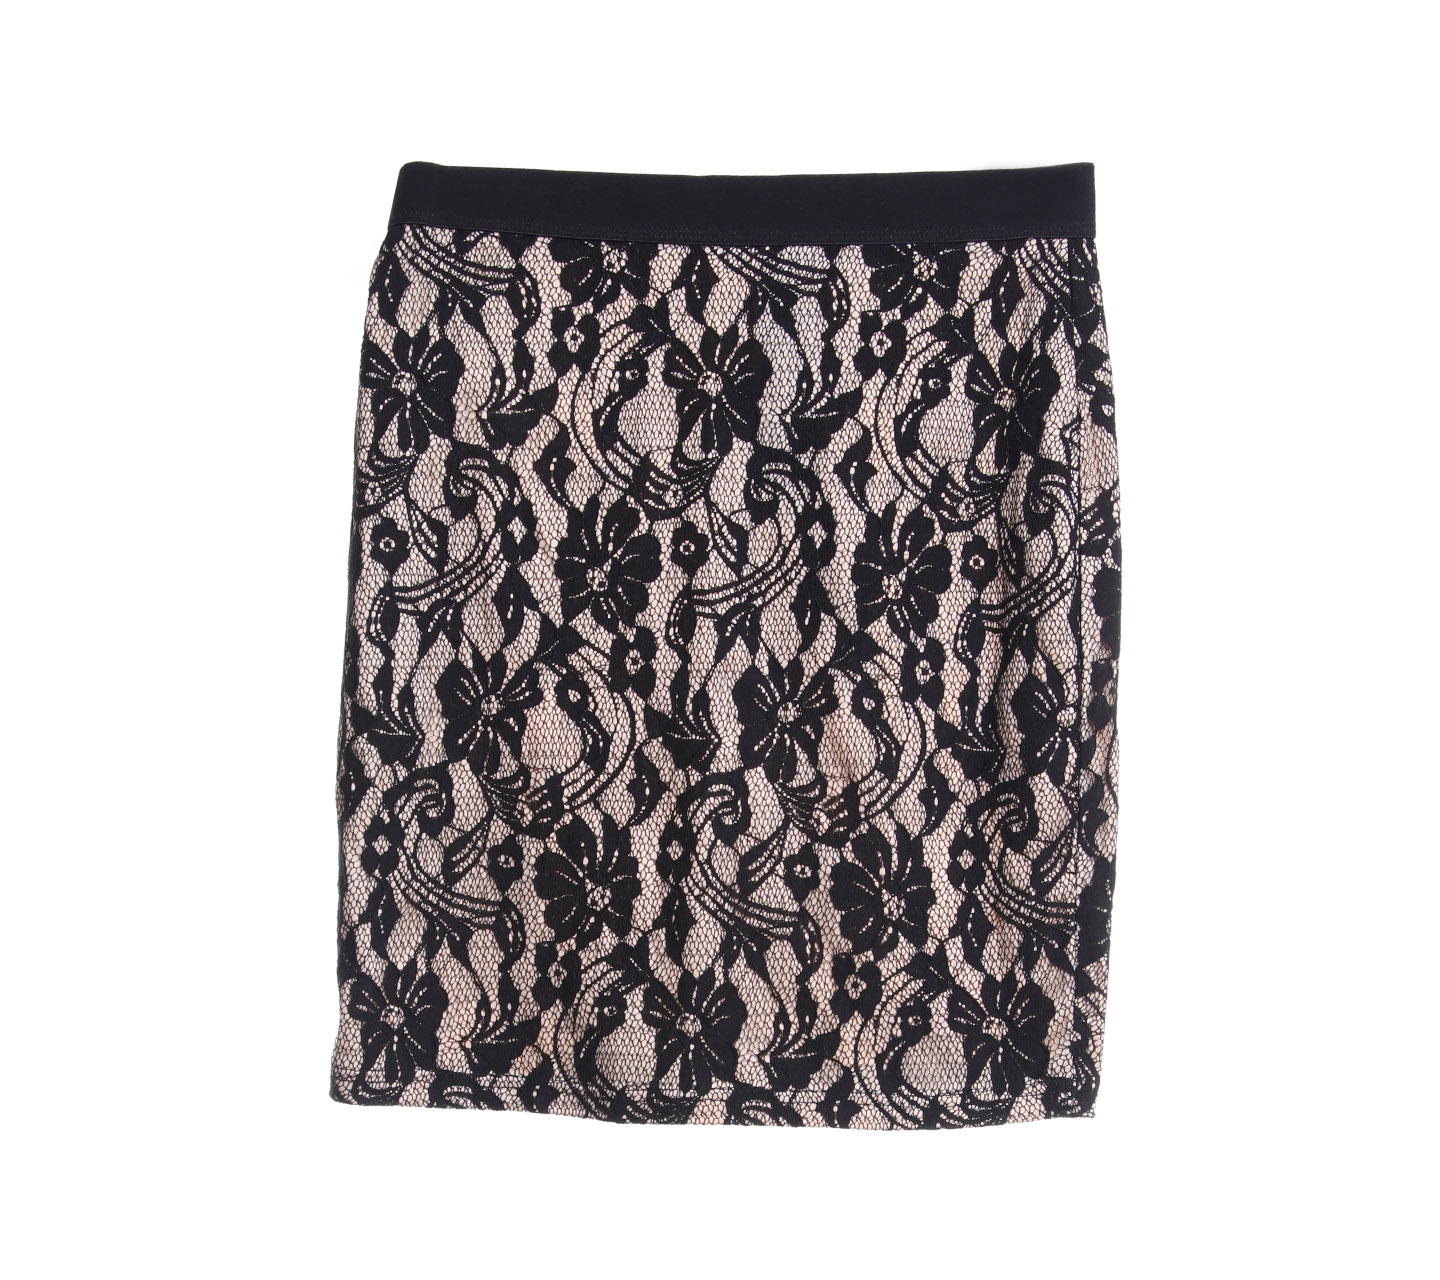 Nichii Black & Light Brown Lace Mini Skirt